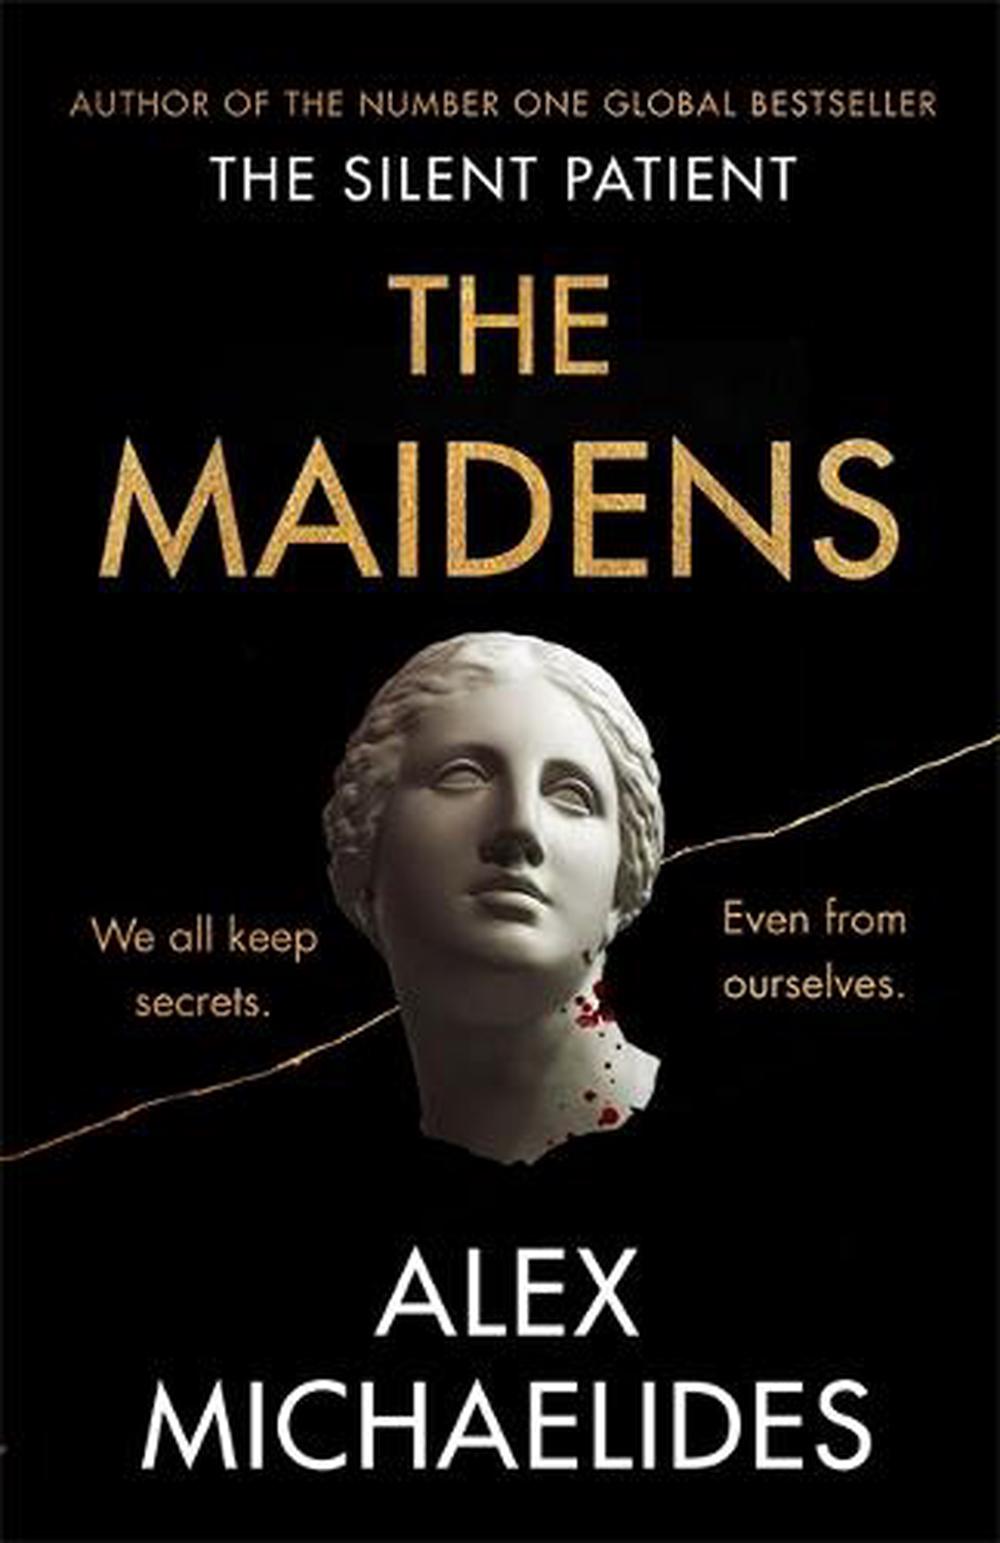 alex michaelides the maidens chapter sampler